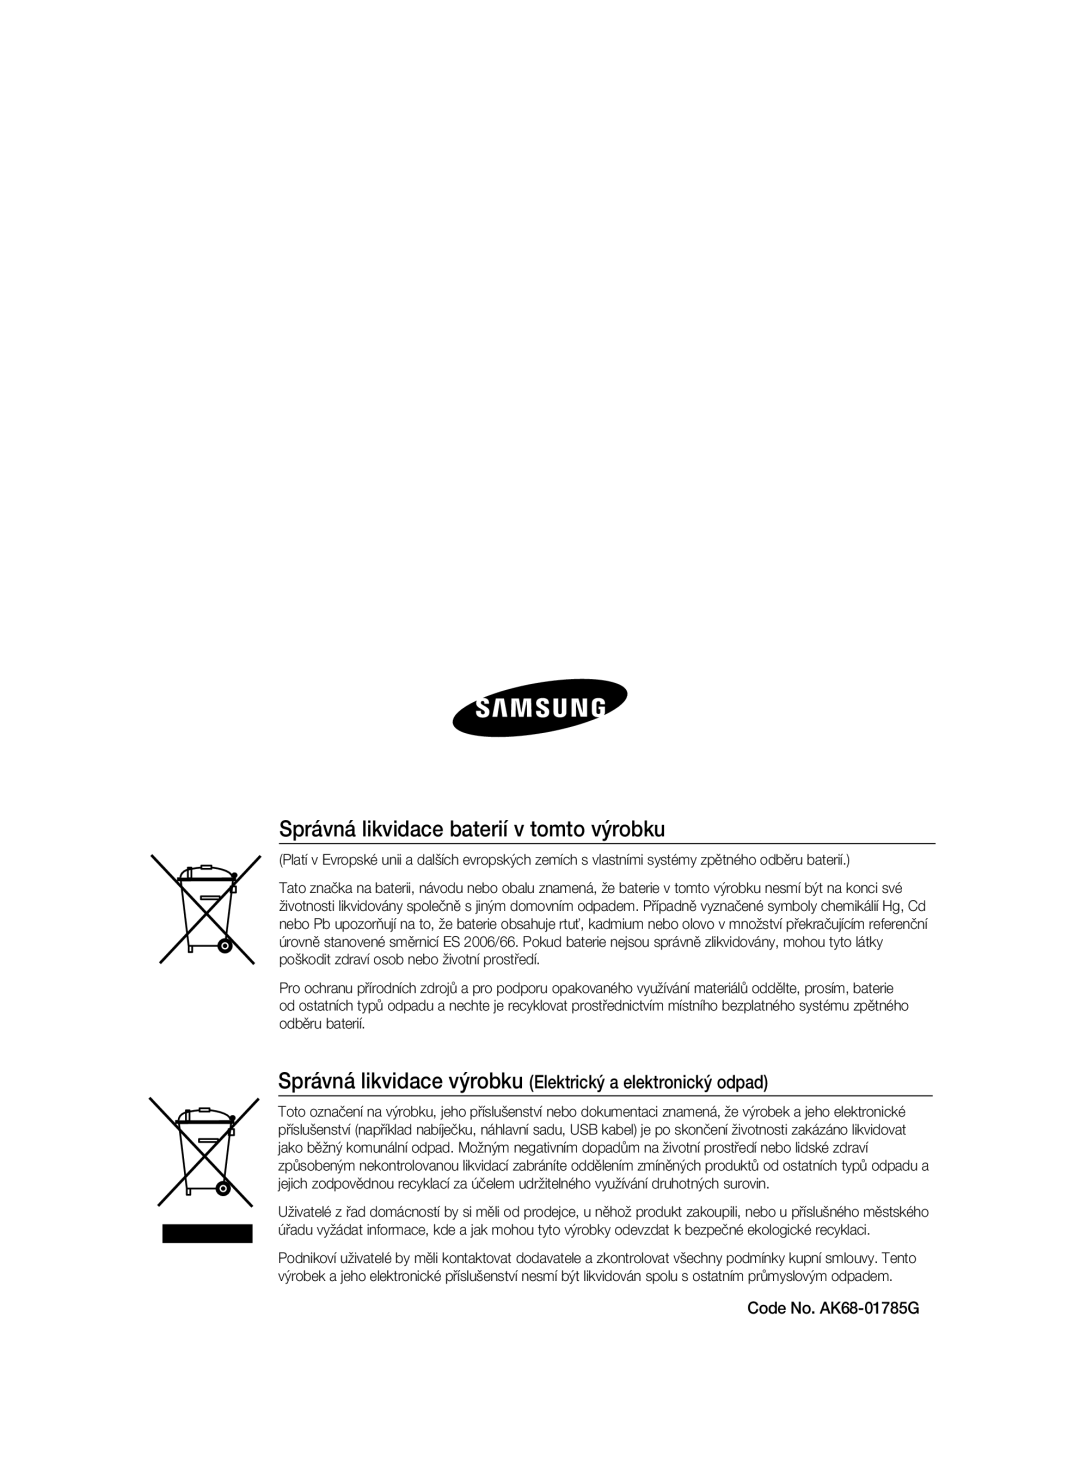 Samsung DVD-SH893/EDC, DVD-SH895/XEF, DVD-SH895/EDC manual Správná likvidace baterií v tomto výrobku, Code No. AK68-01785G 